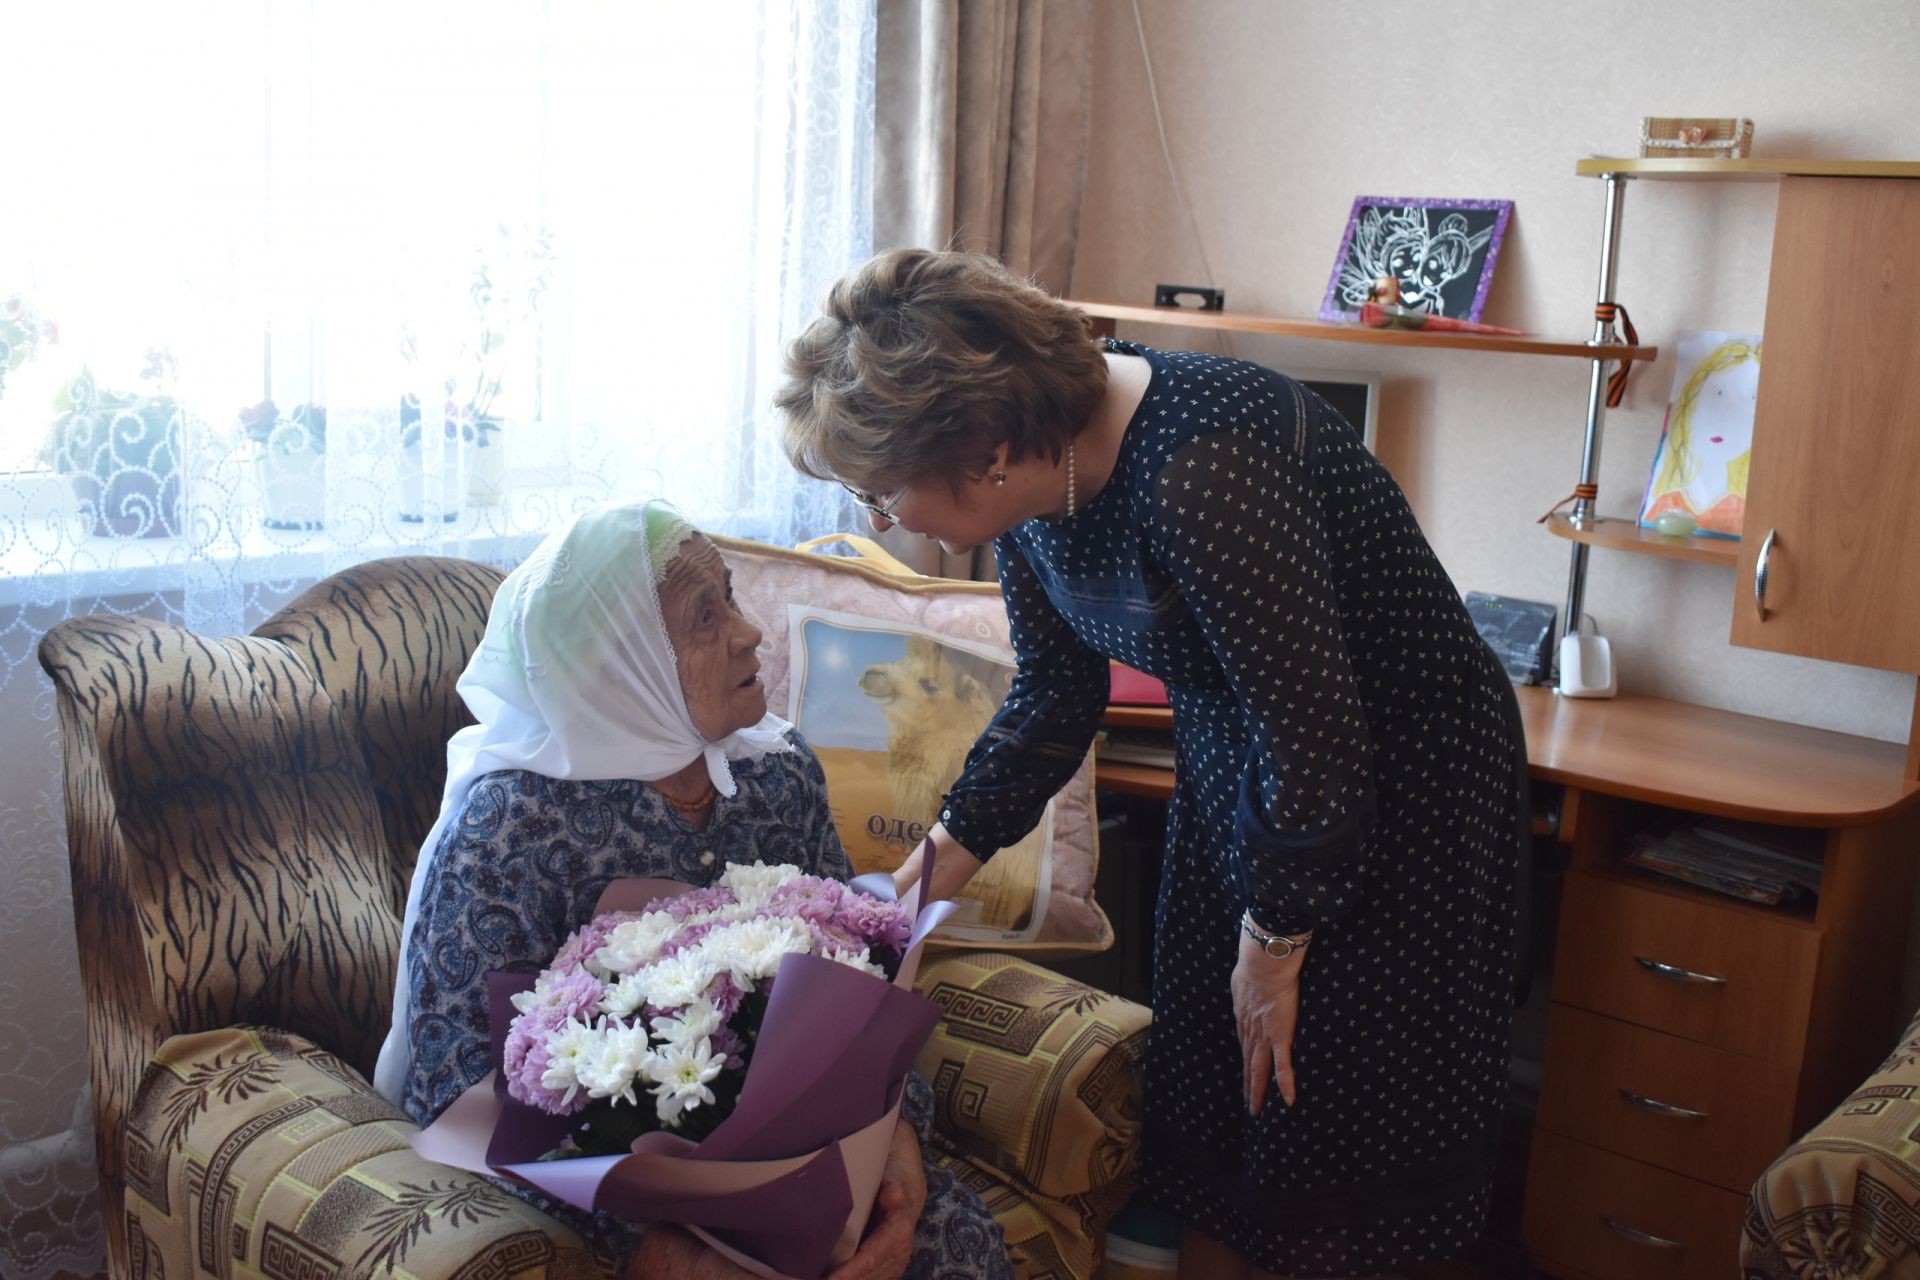 Обладательница ордена «Материнская слава» отметила 90-летний юбилей